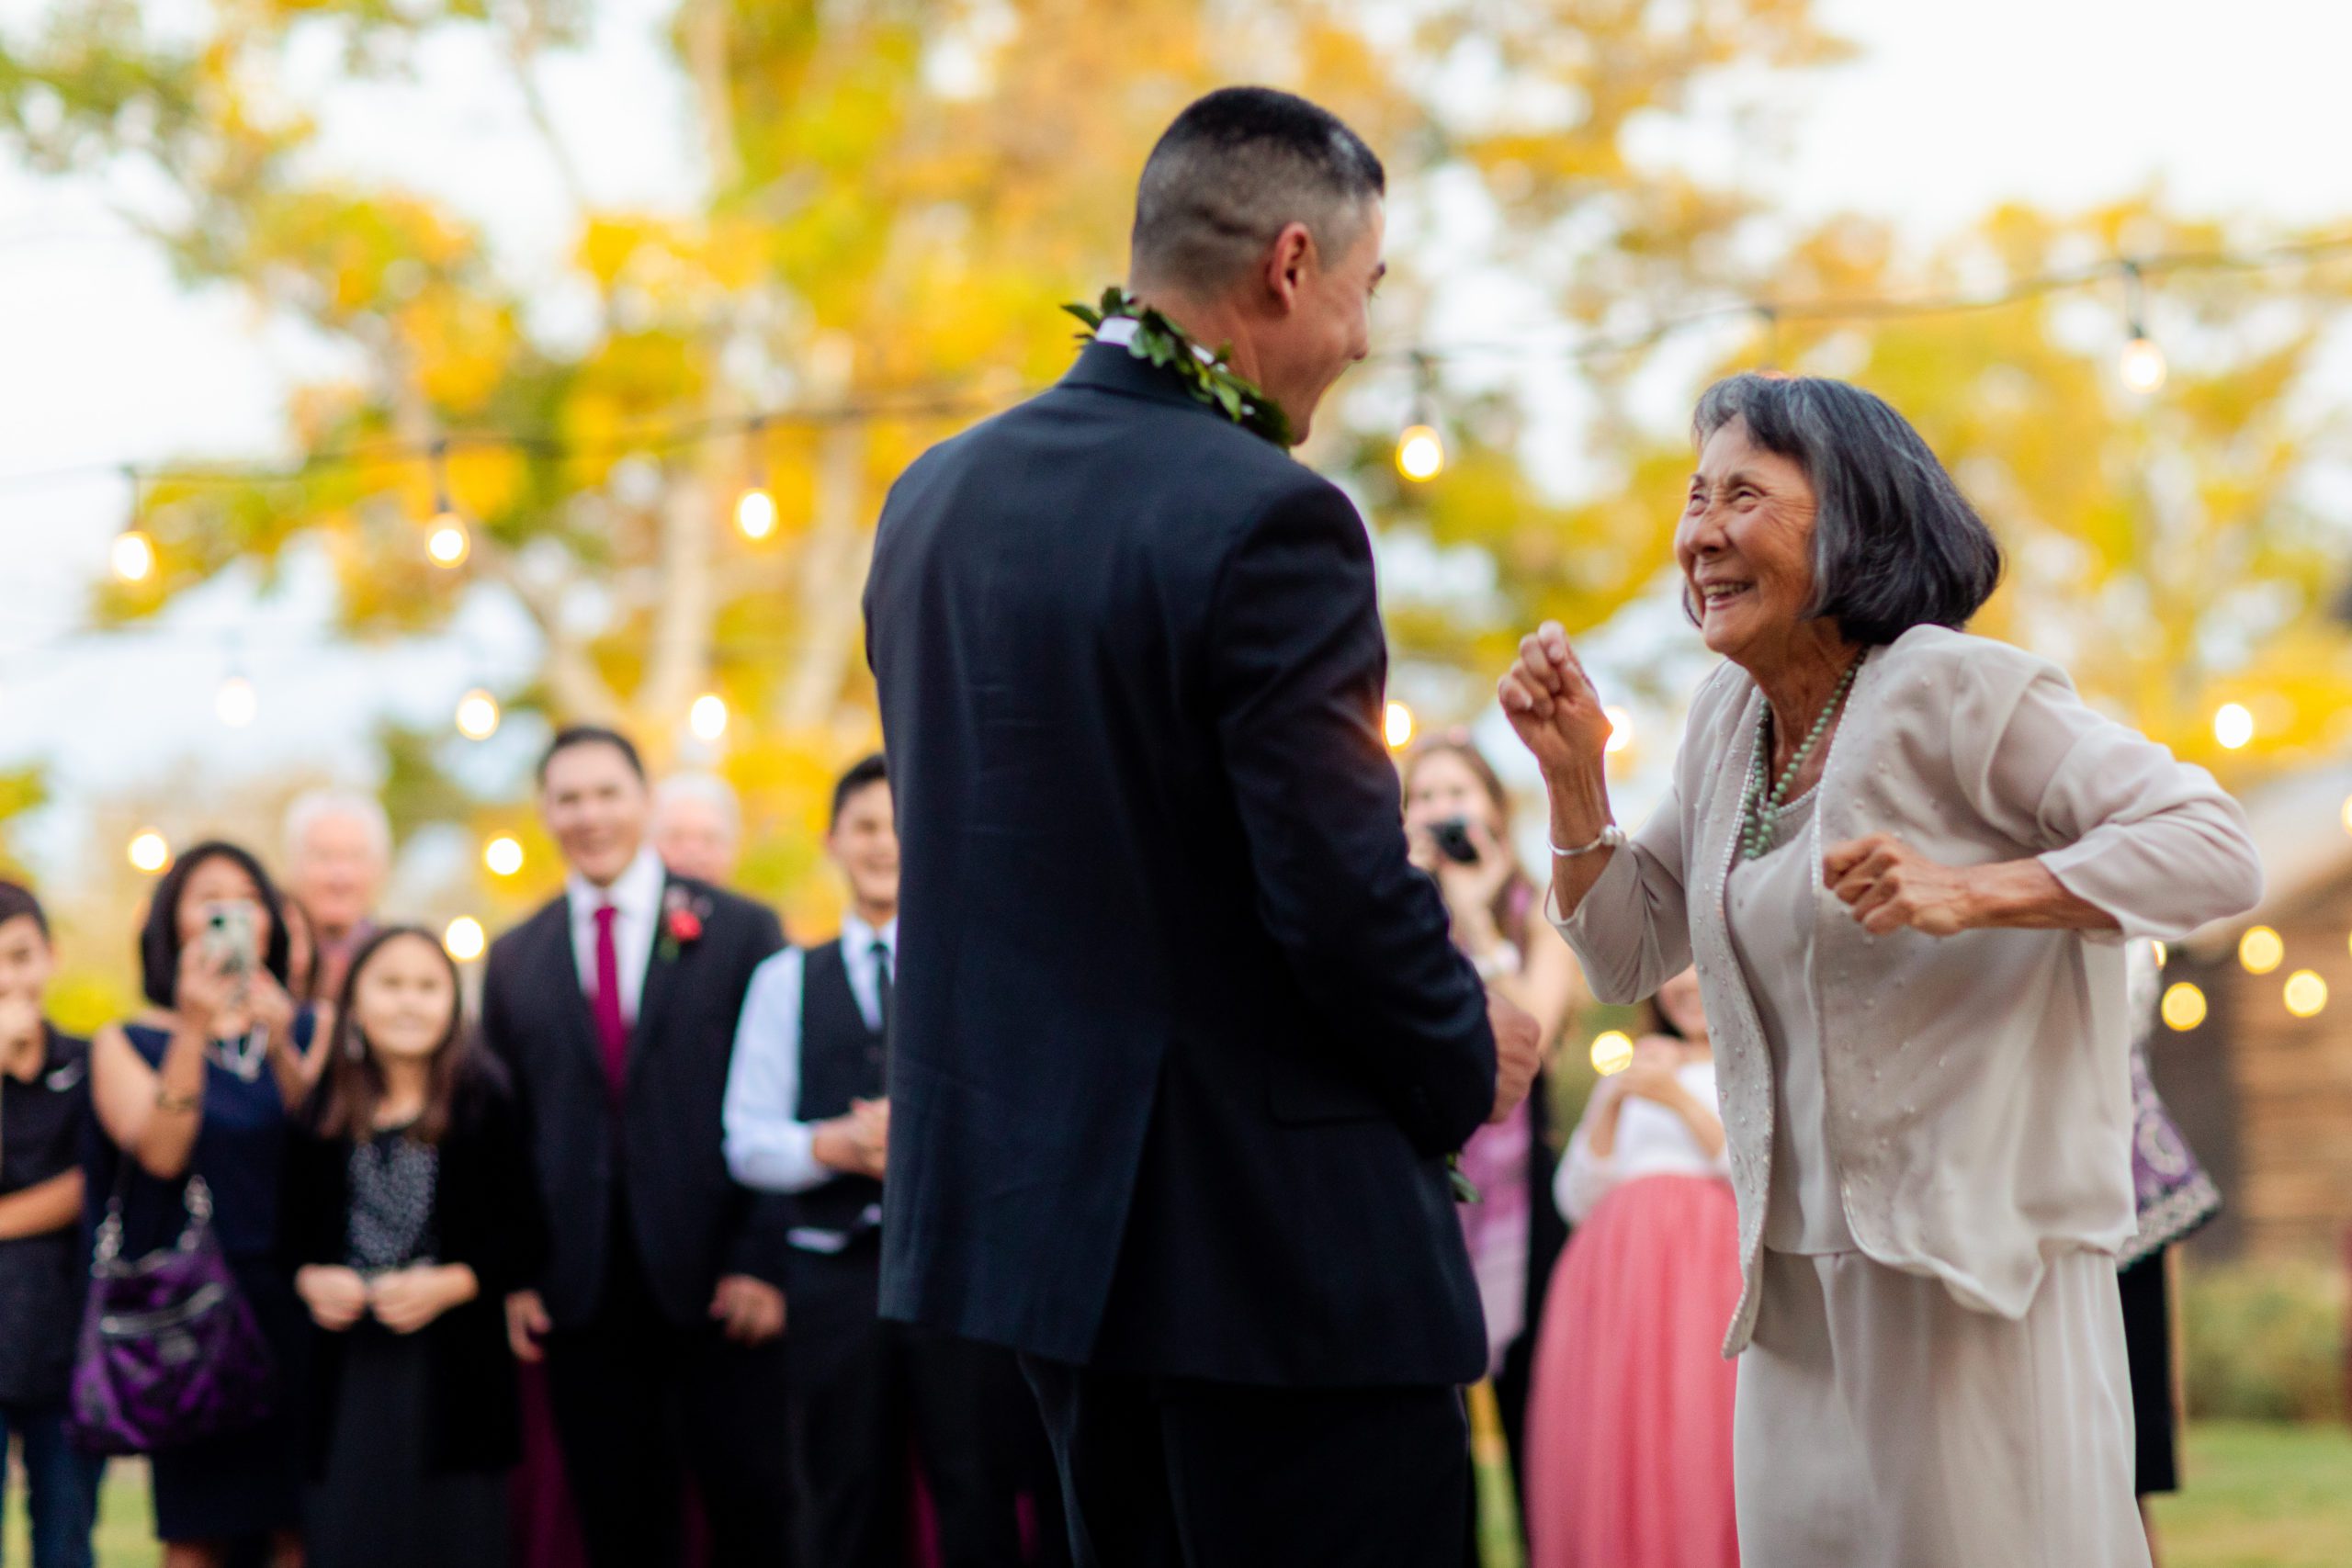 Mother son wedding dance, groom and mom wedding dance, fall wedding in Colorado, The Barn at Raccoon Creek